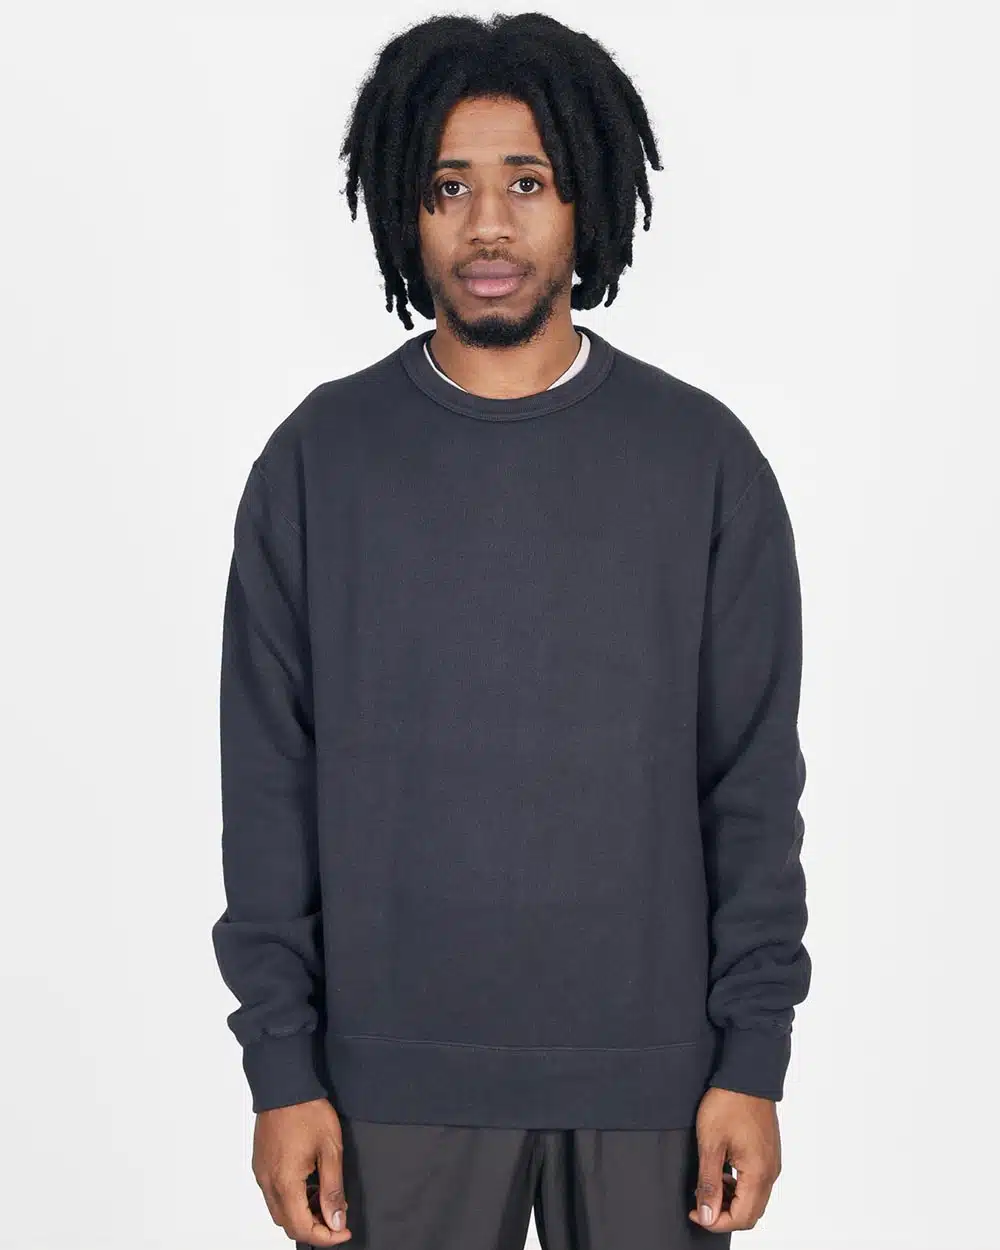 Loop & Weft Tompkins Knit Crewneck Sweatshirt - Antique Black